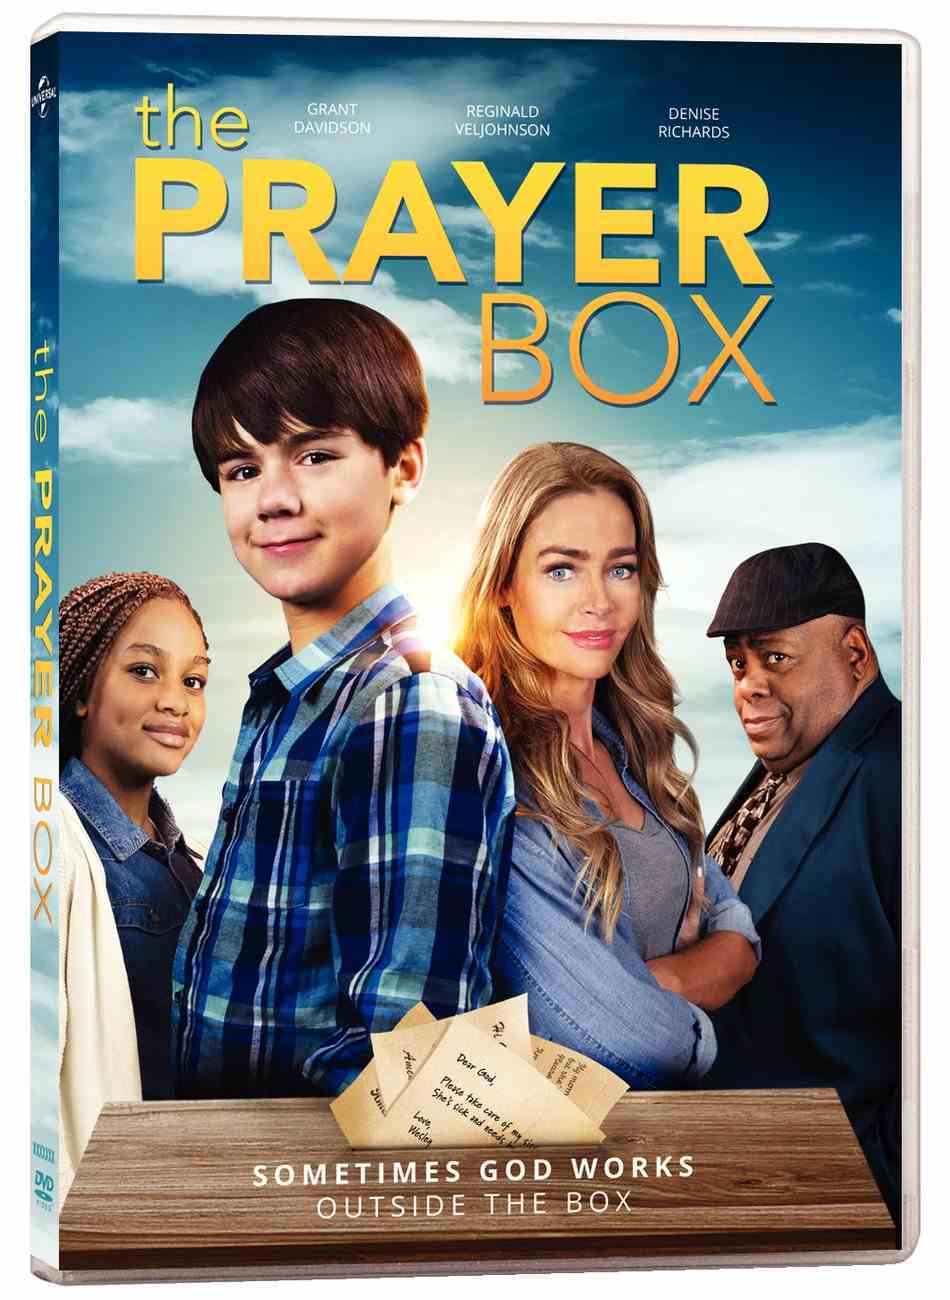 The Prayer Box DVD